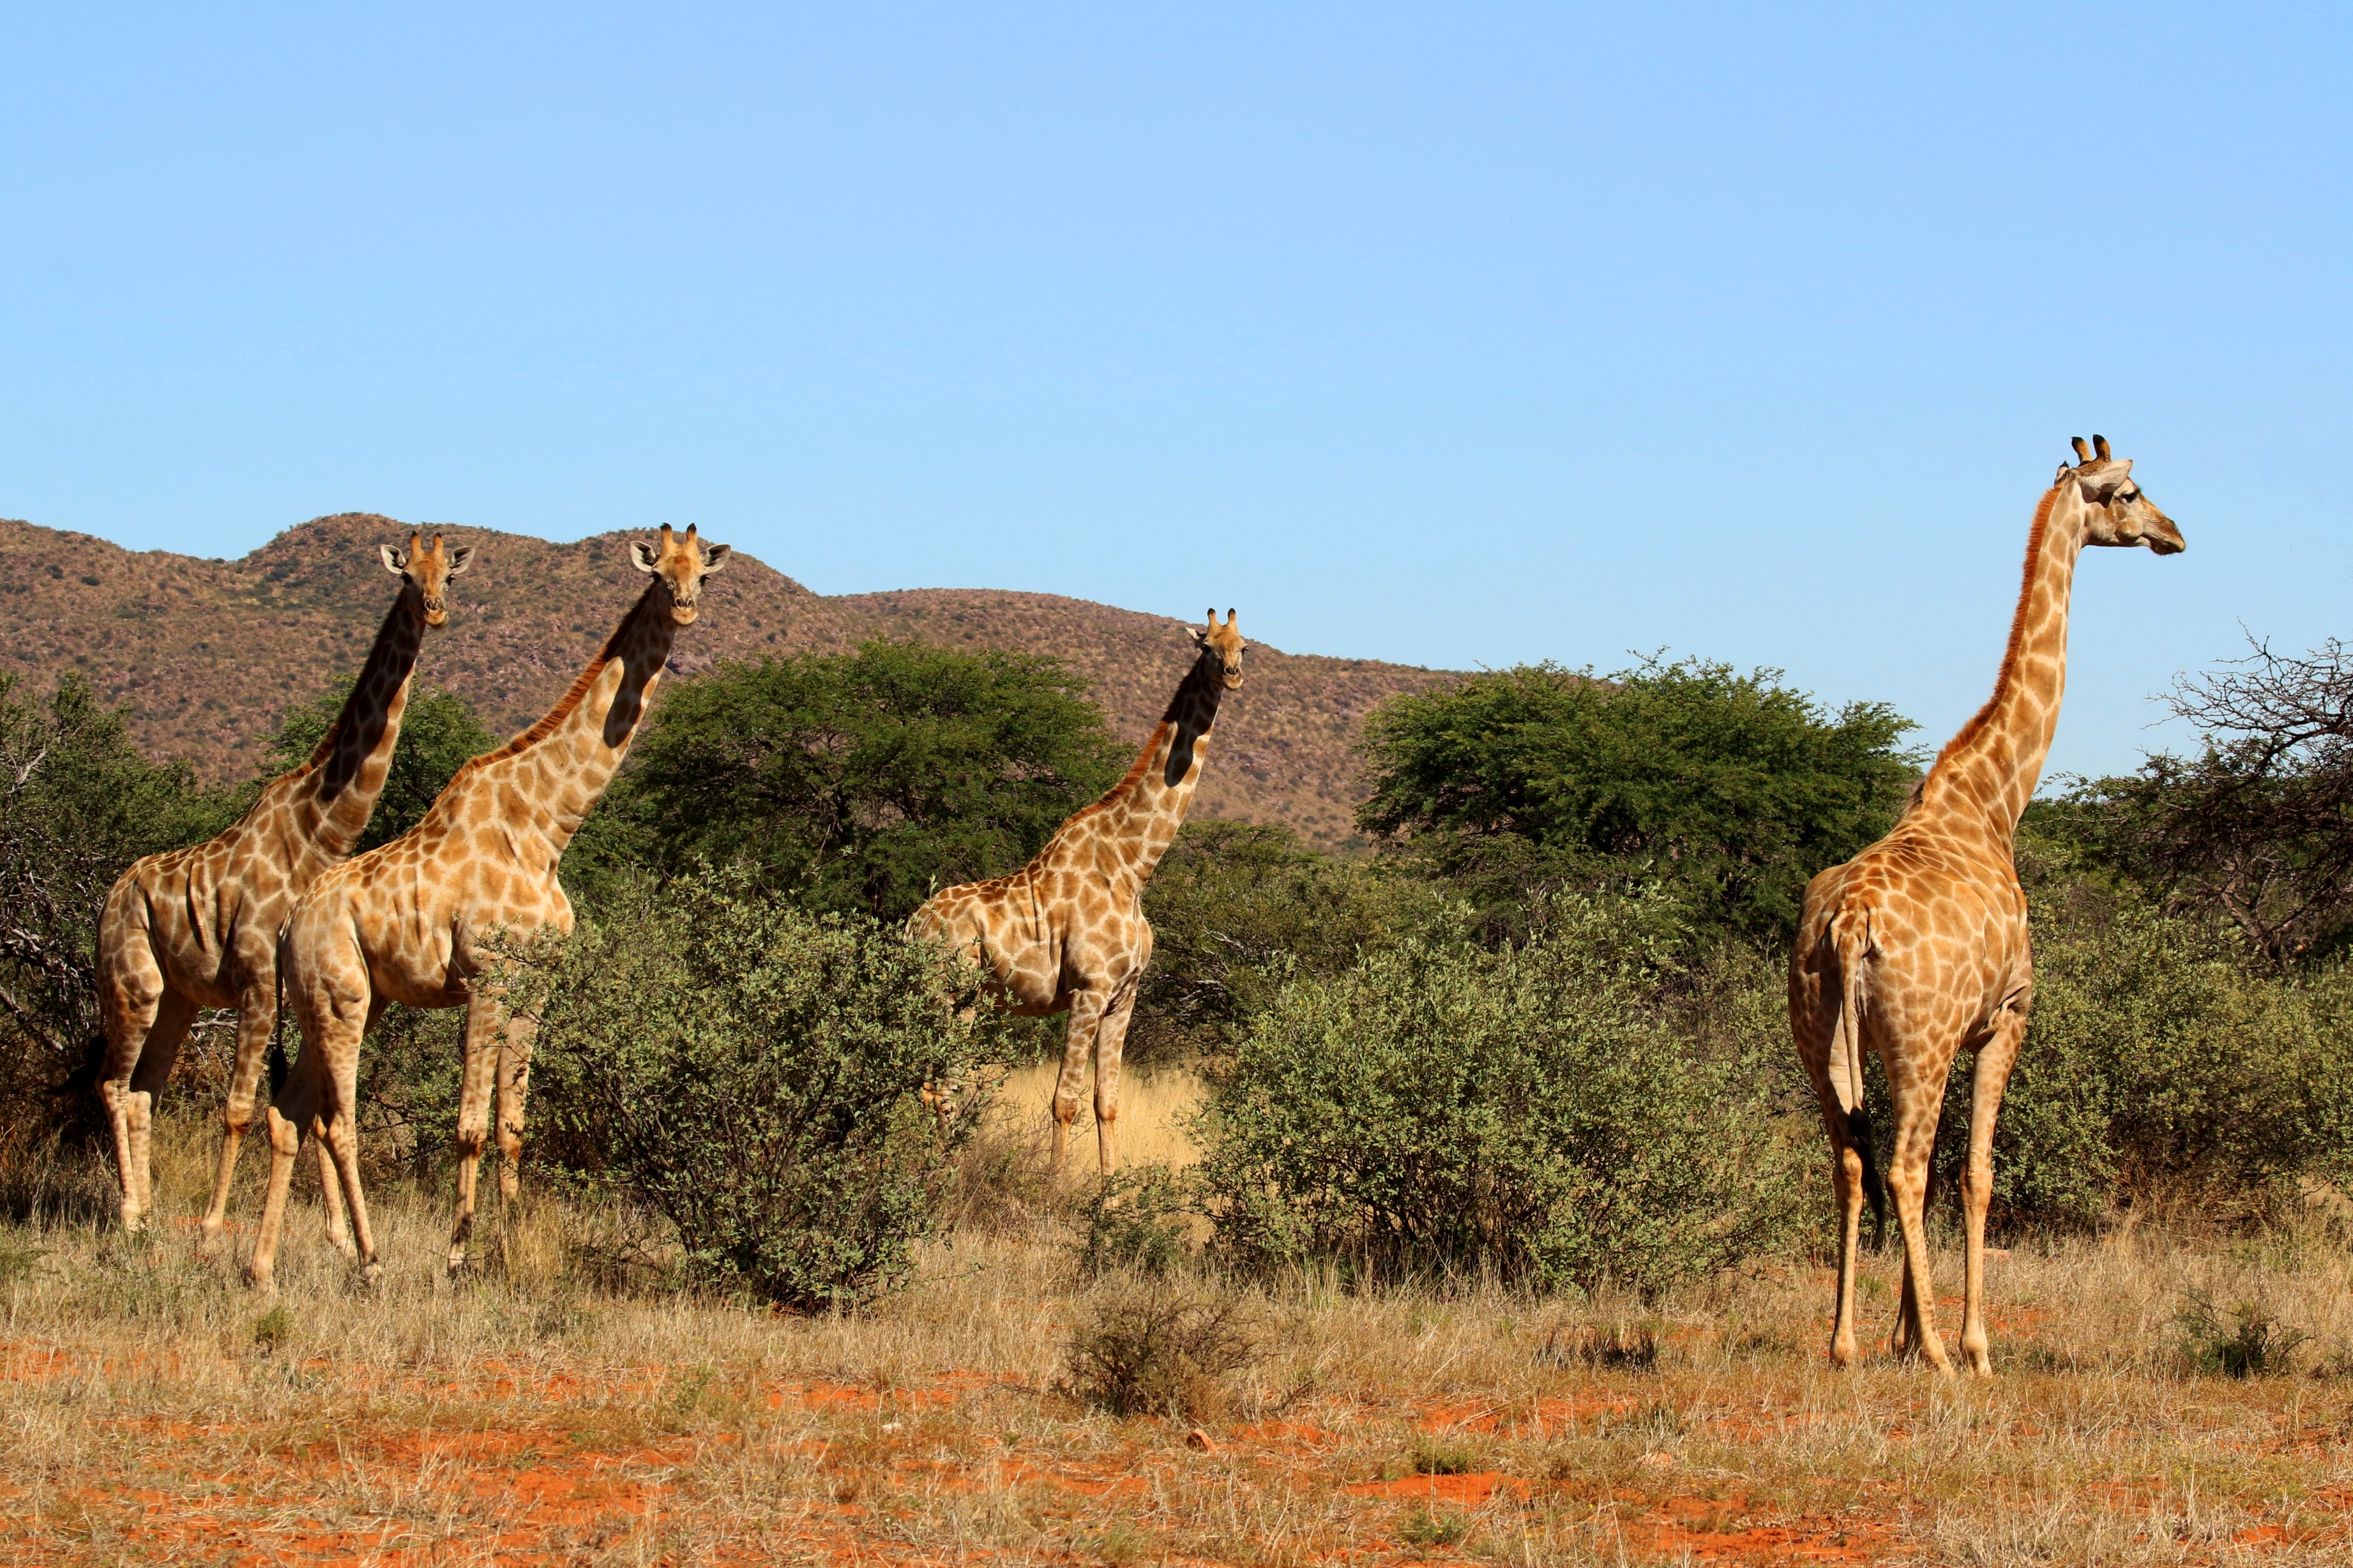 Giraffe (Giraffa camelopardalis) females